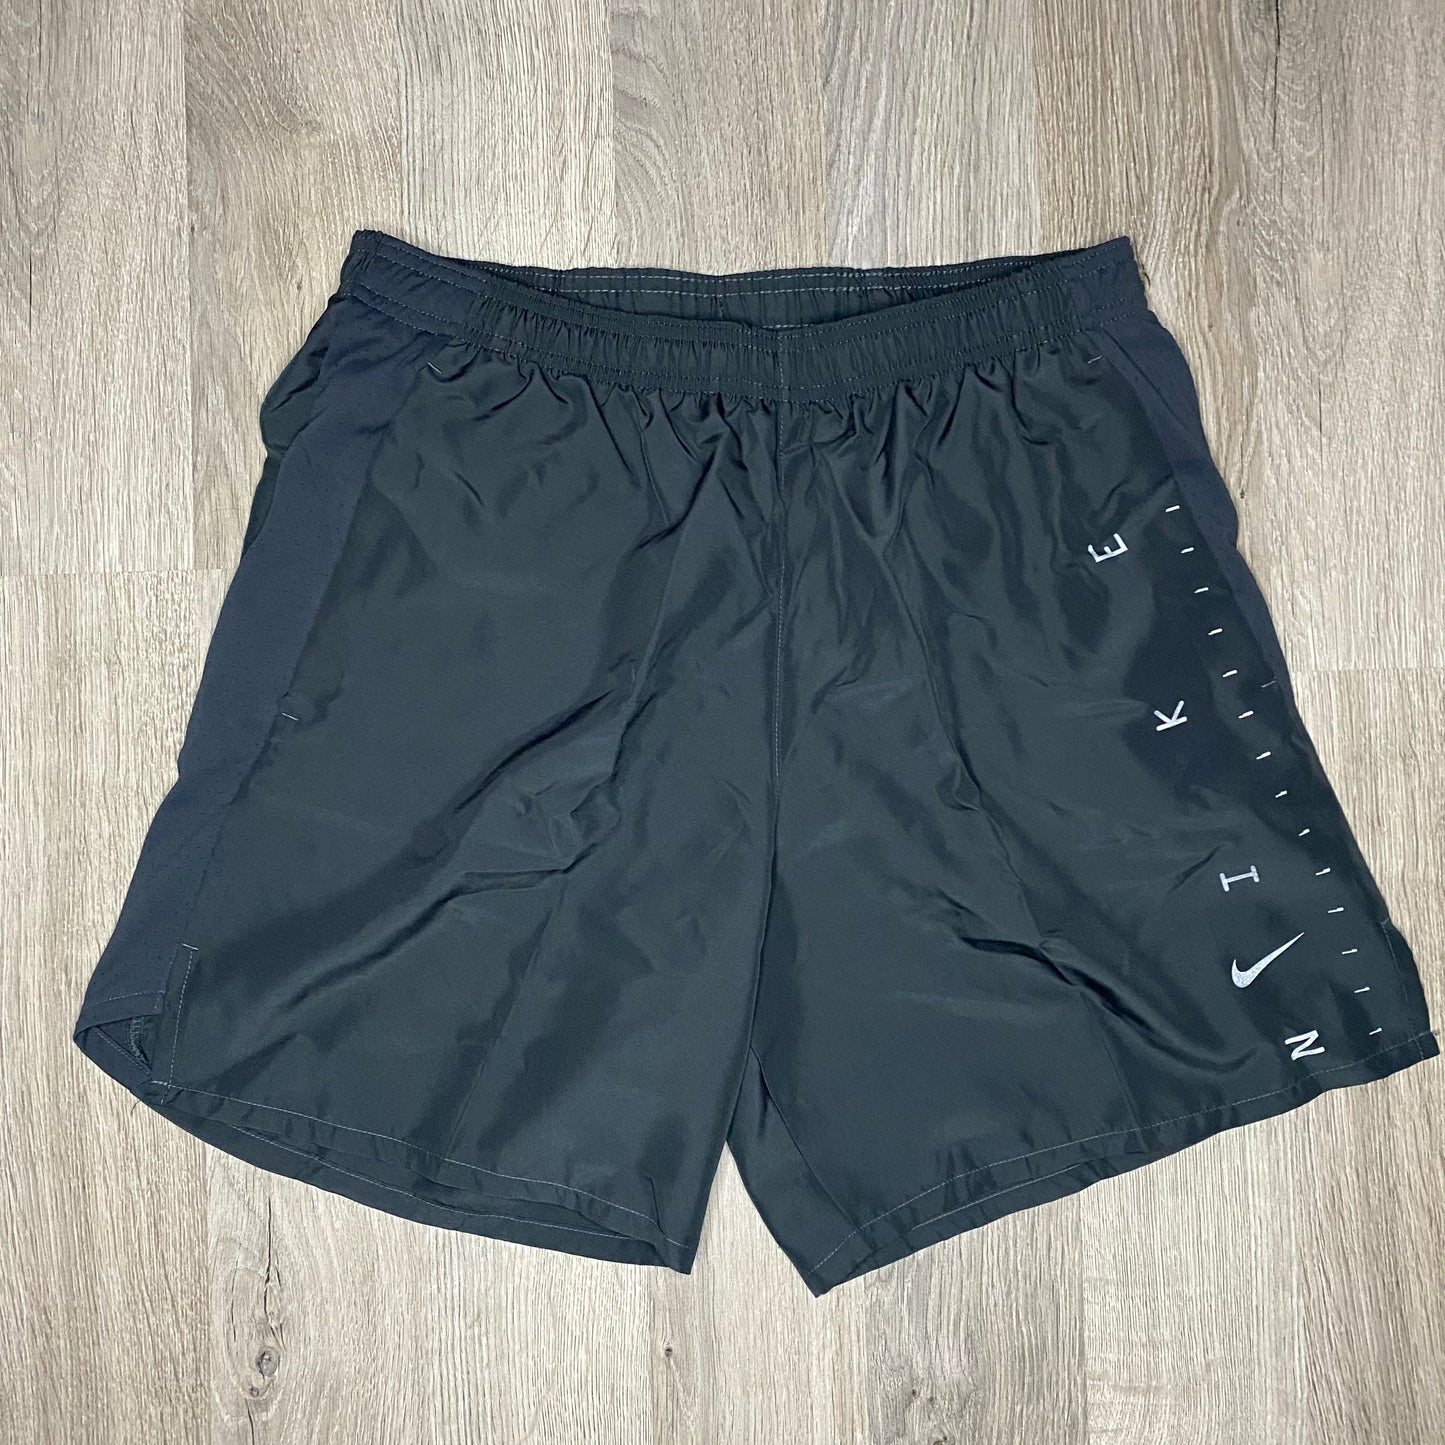 Nike Challenger Graphic Shorts Black – RESTOCK3D